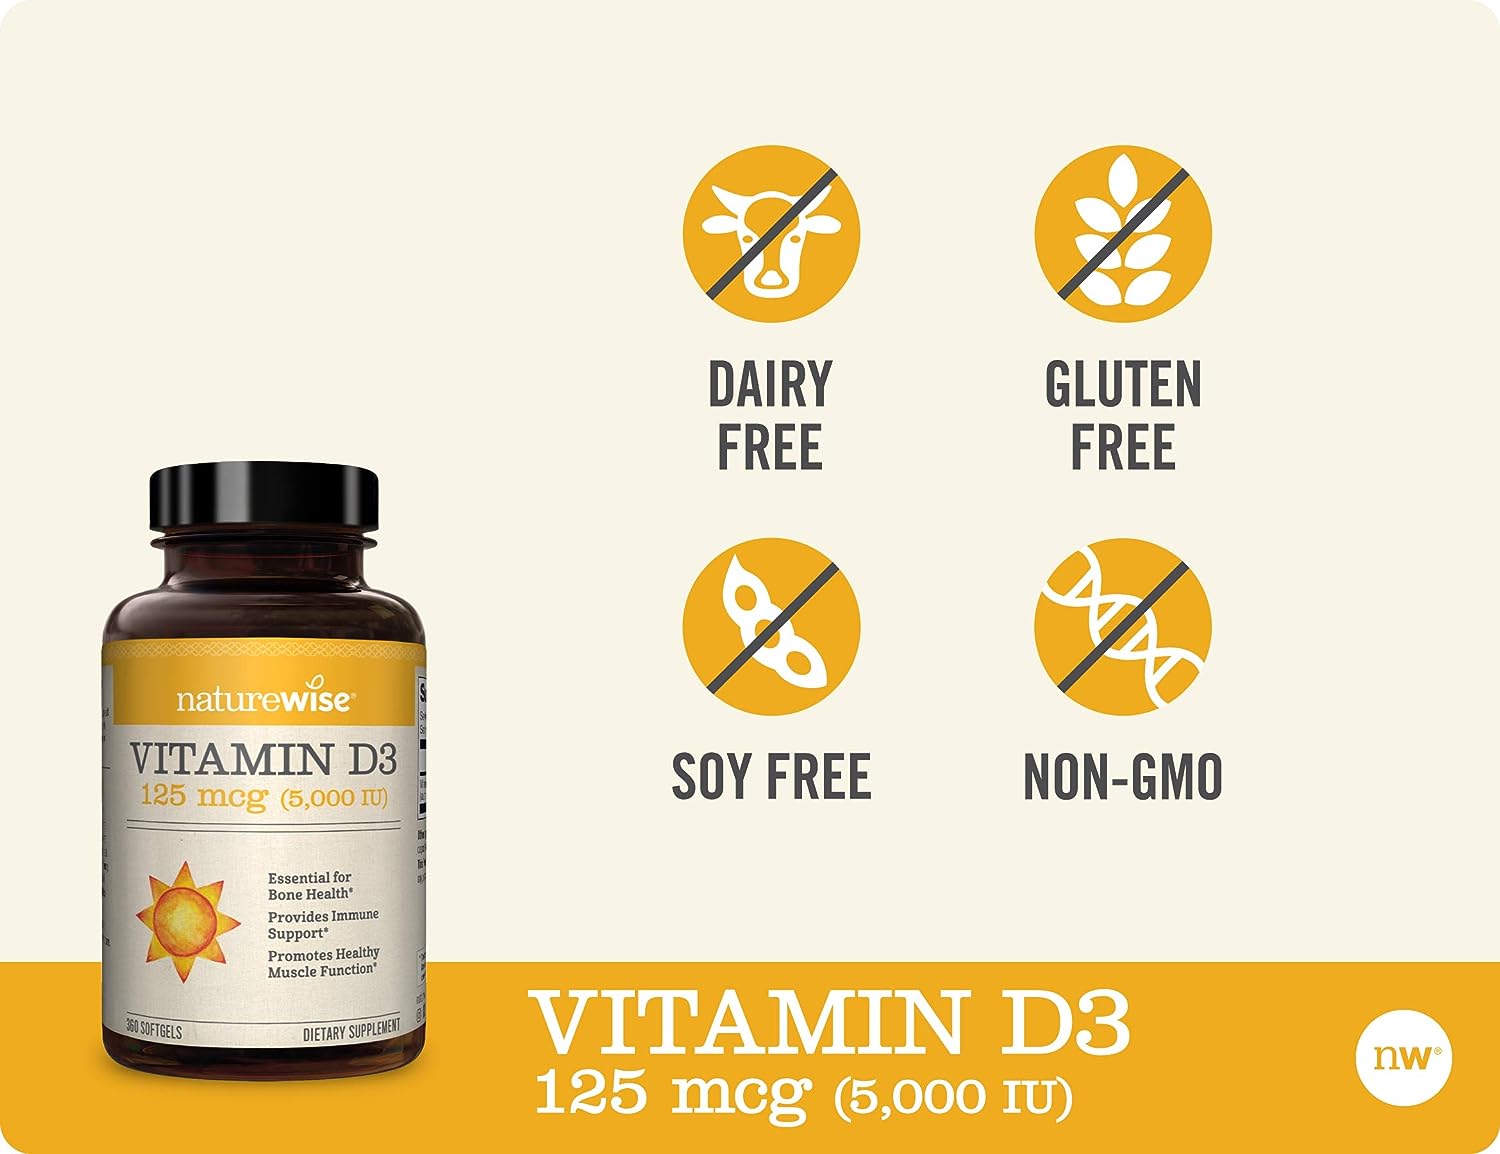 NatureWise Vitamin D3 5000iu Review